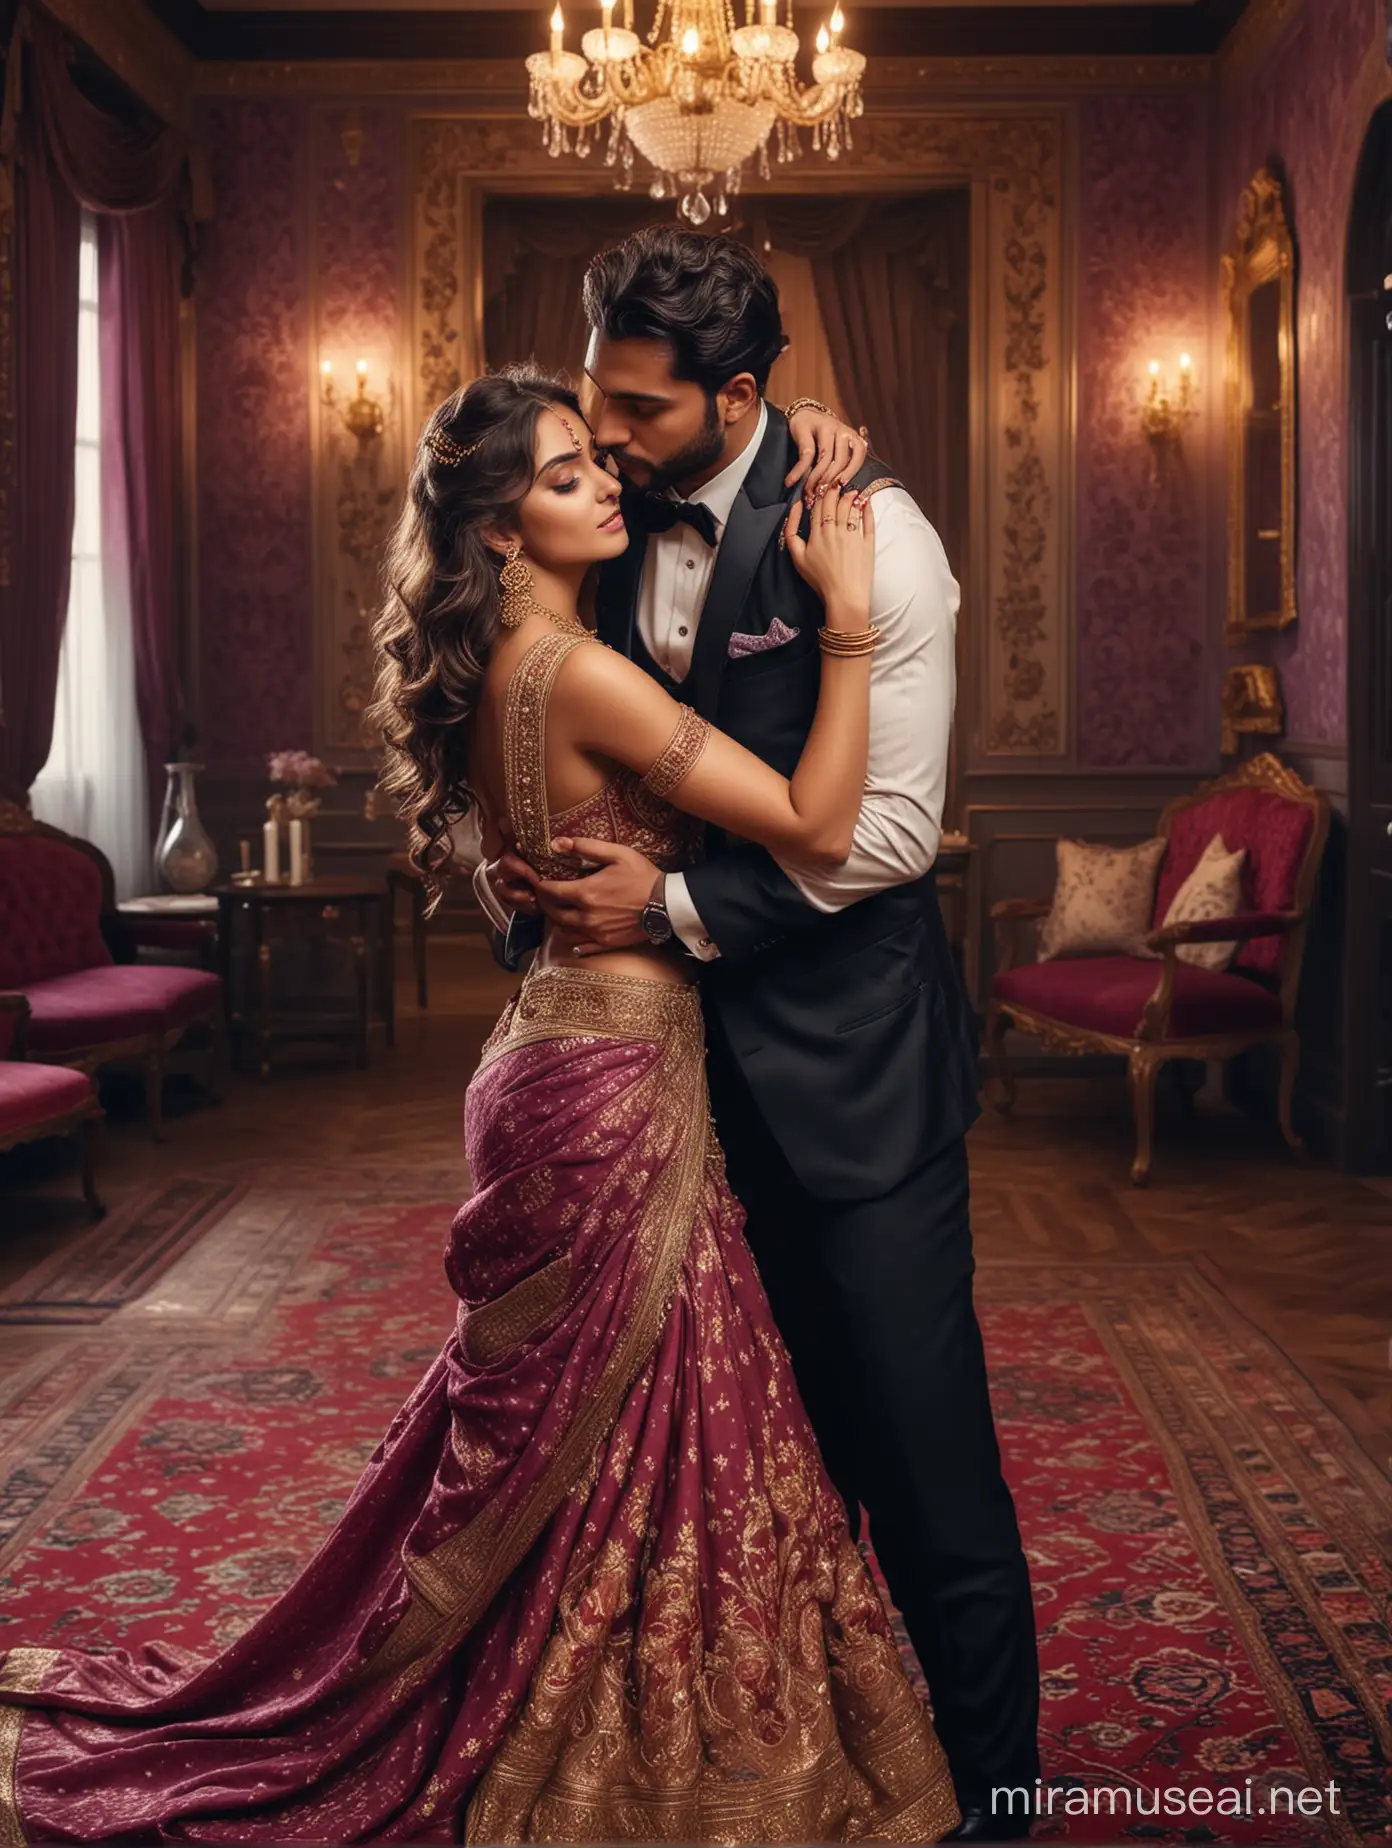 Elegant Indian Couple Embracing in Dimly Lit Palace Interior